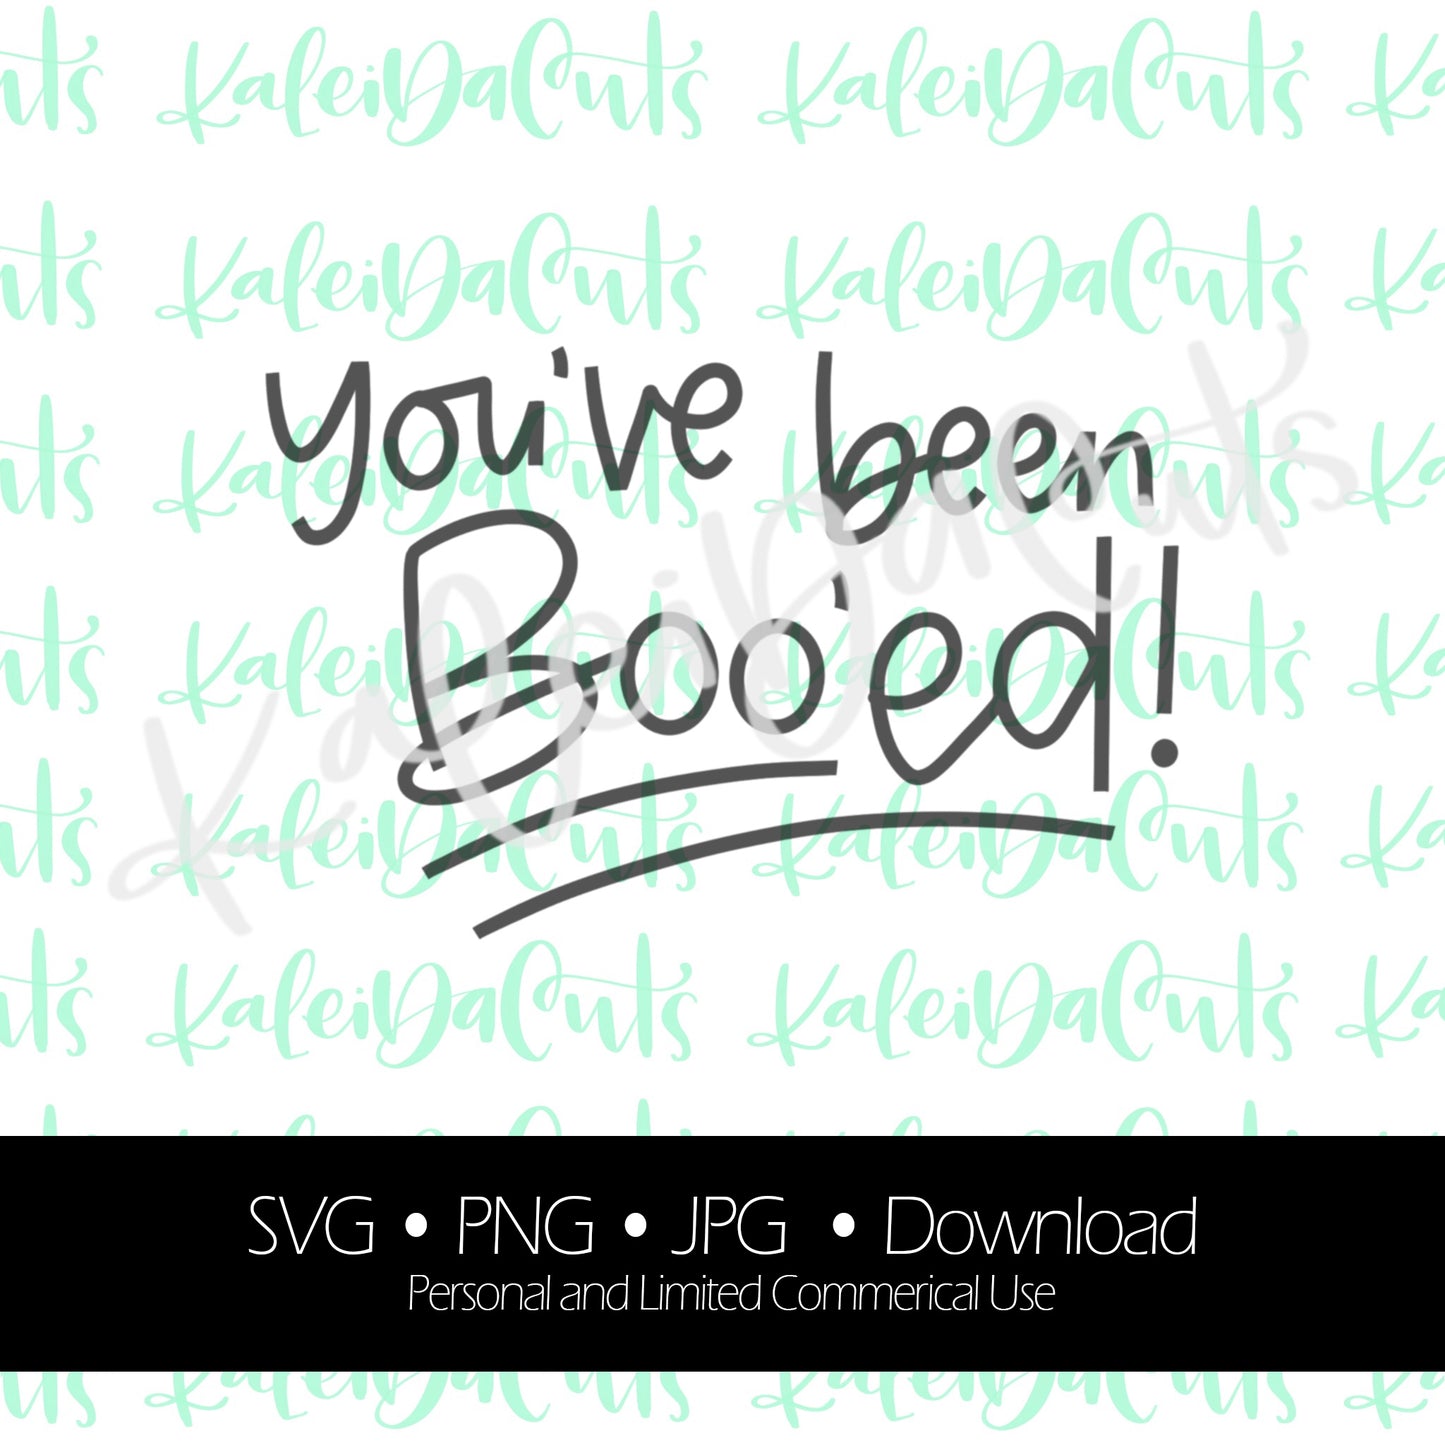 You've Been Boo'ed Lettering - Digital Download.